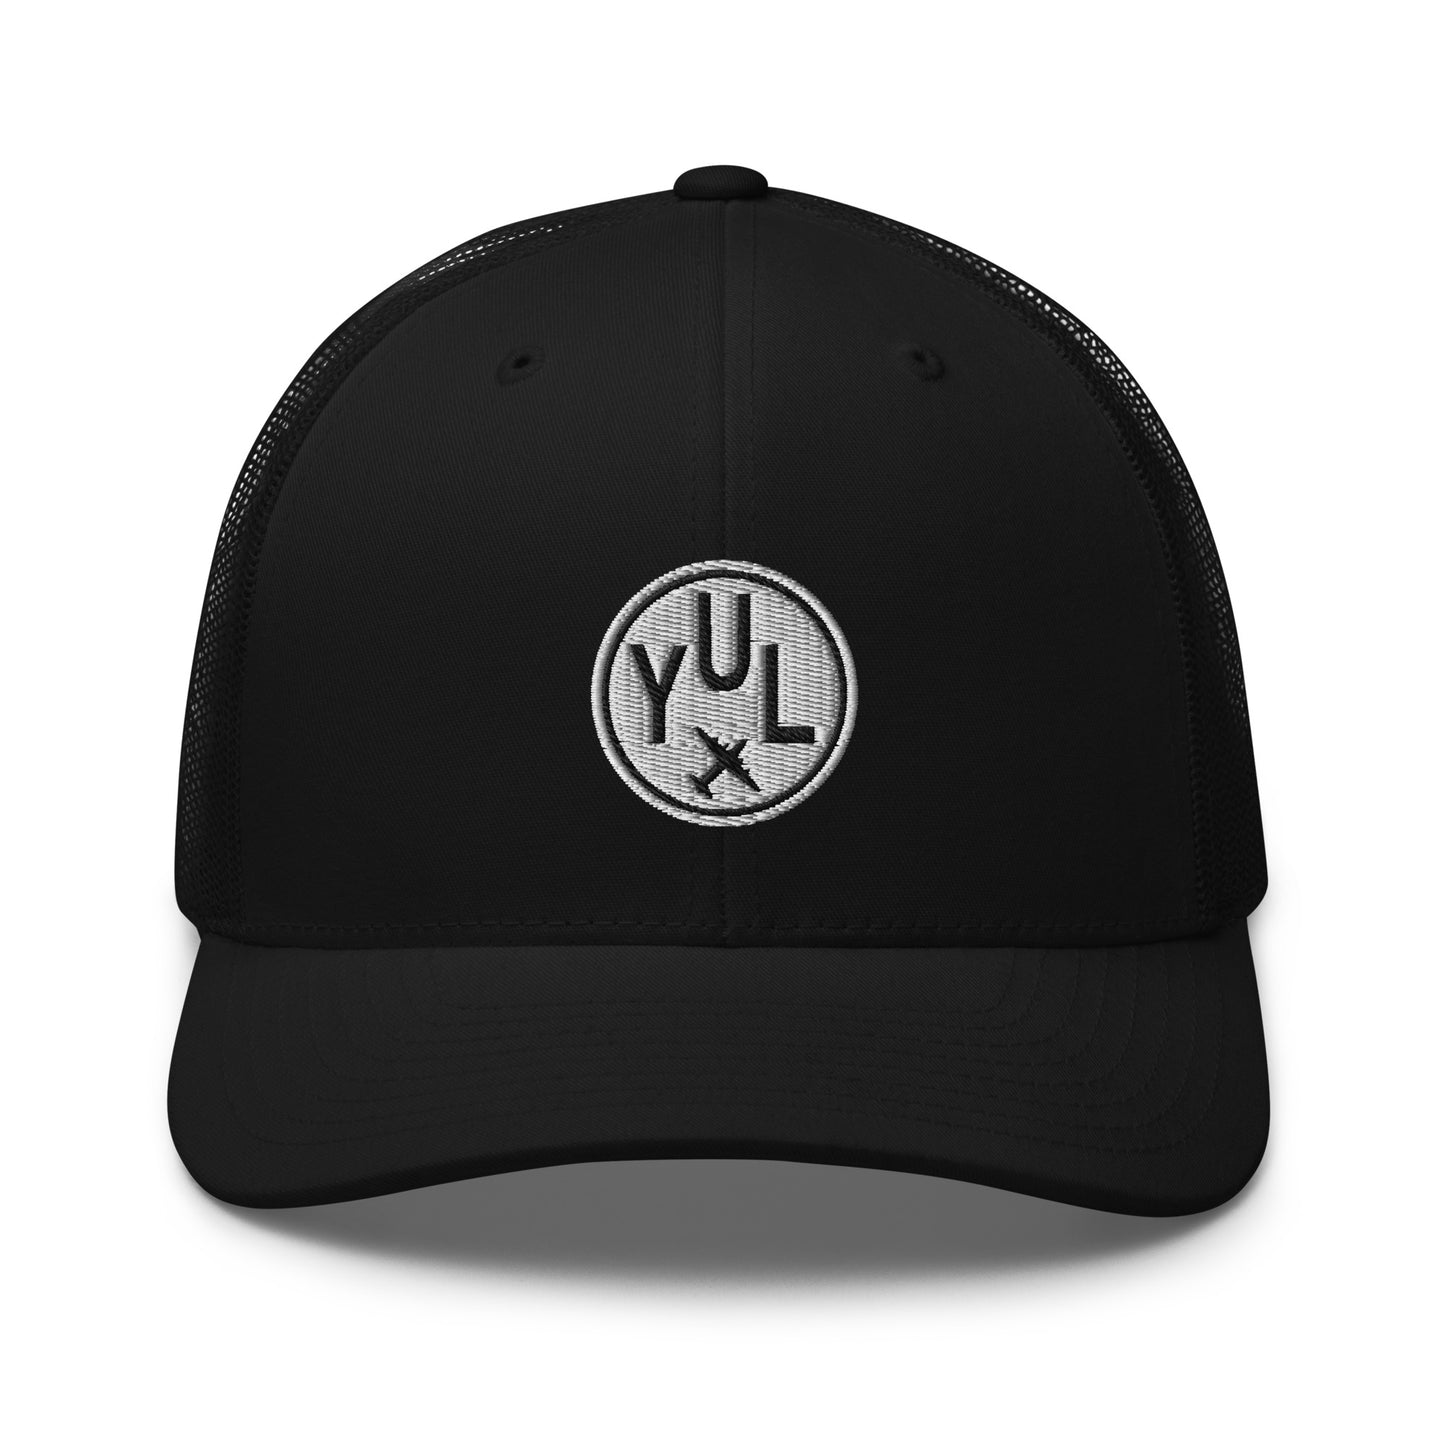 Roundel Trucker Hat - Black & White • YUL Montreal • YHM Designs - Image 06